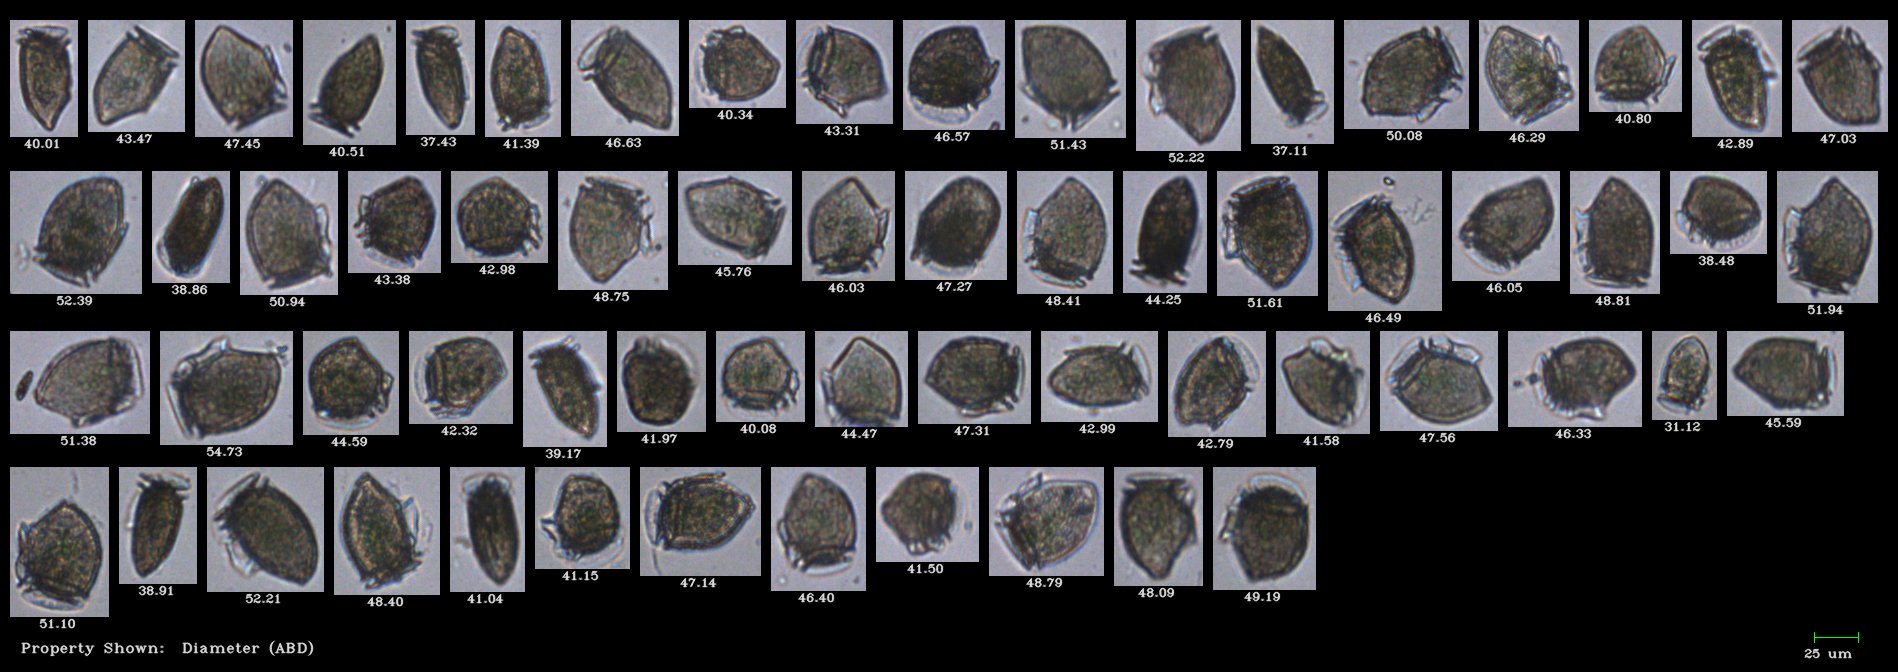 FlowCam collage of harmful algae Dinophysis norvegica